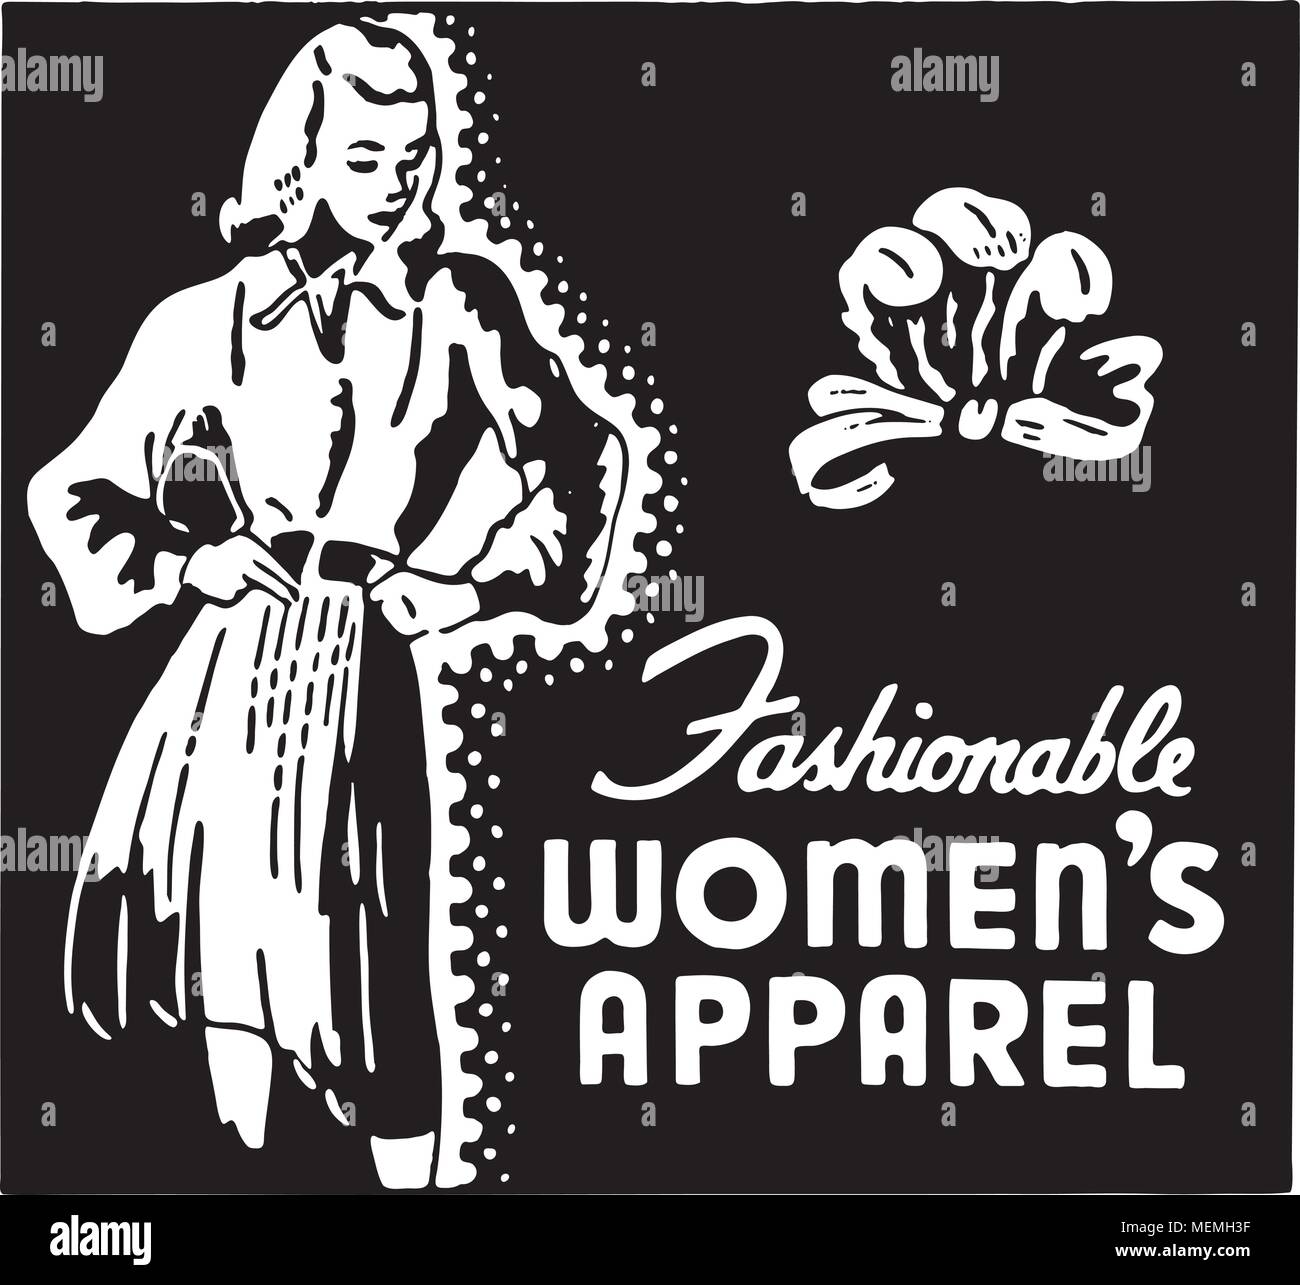 Fashionable Women's Apparel - Retro Ad Art Banner Stock Vector